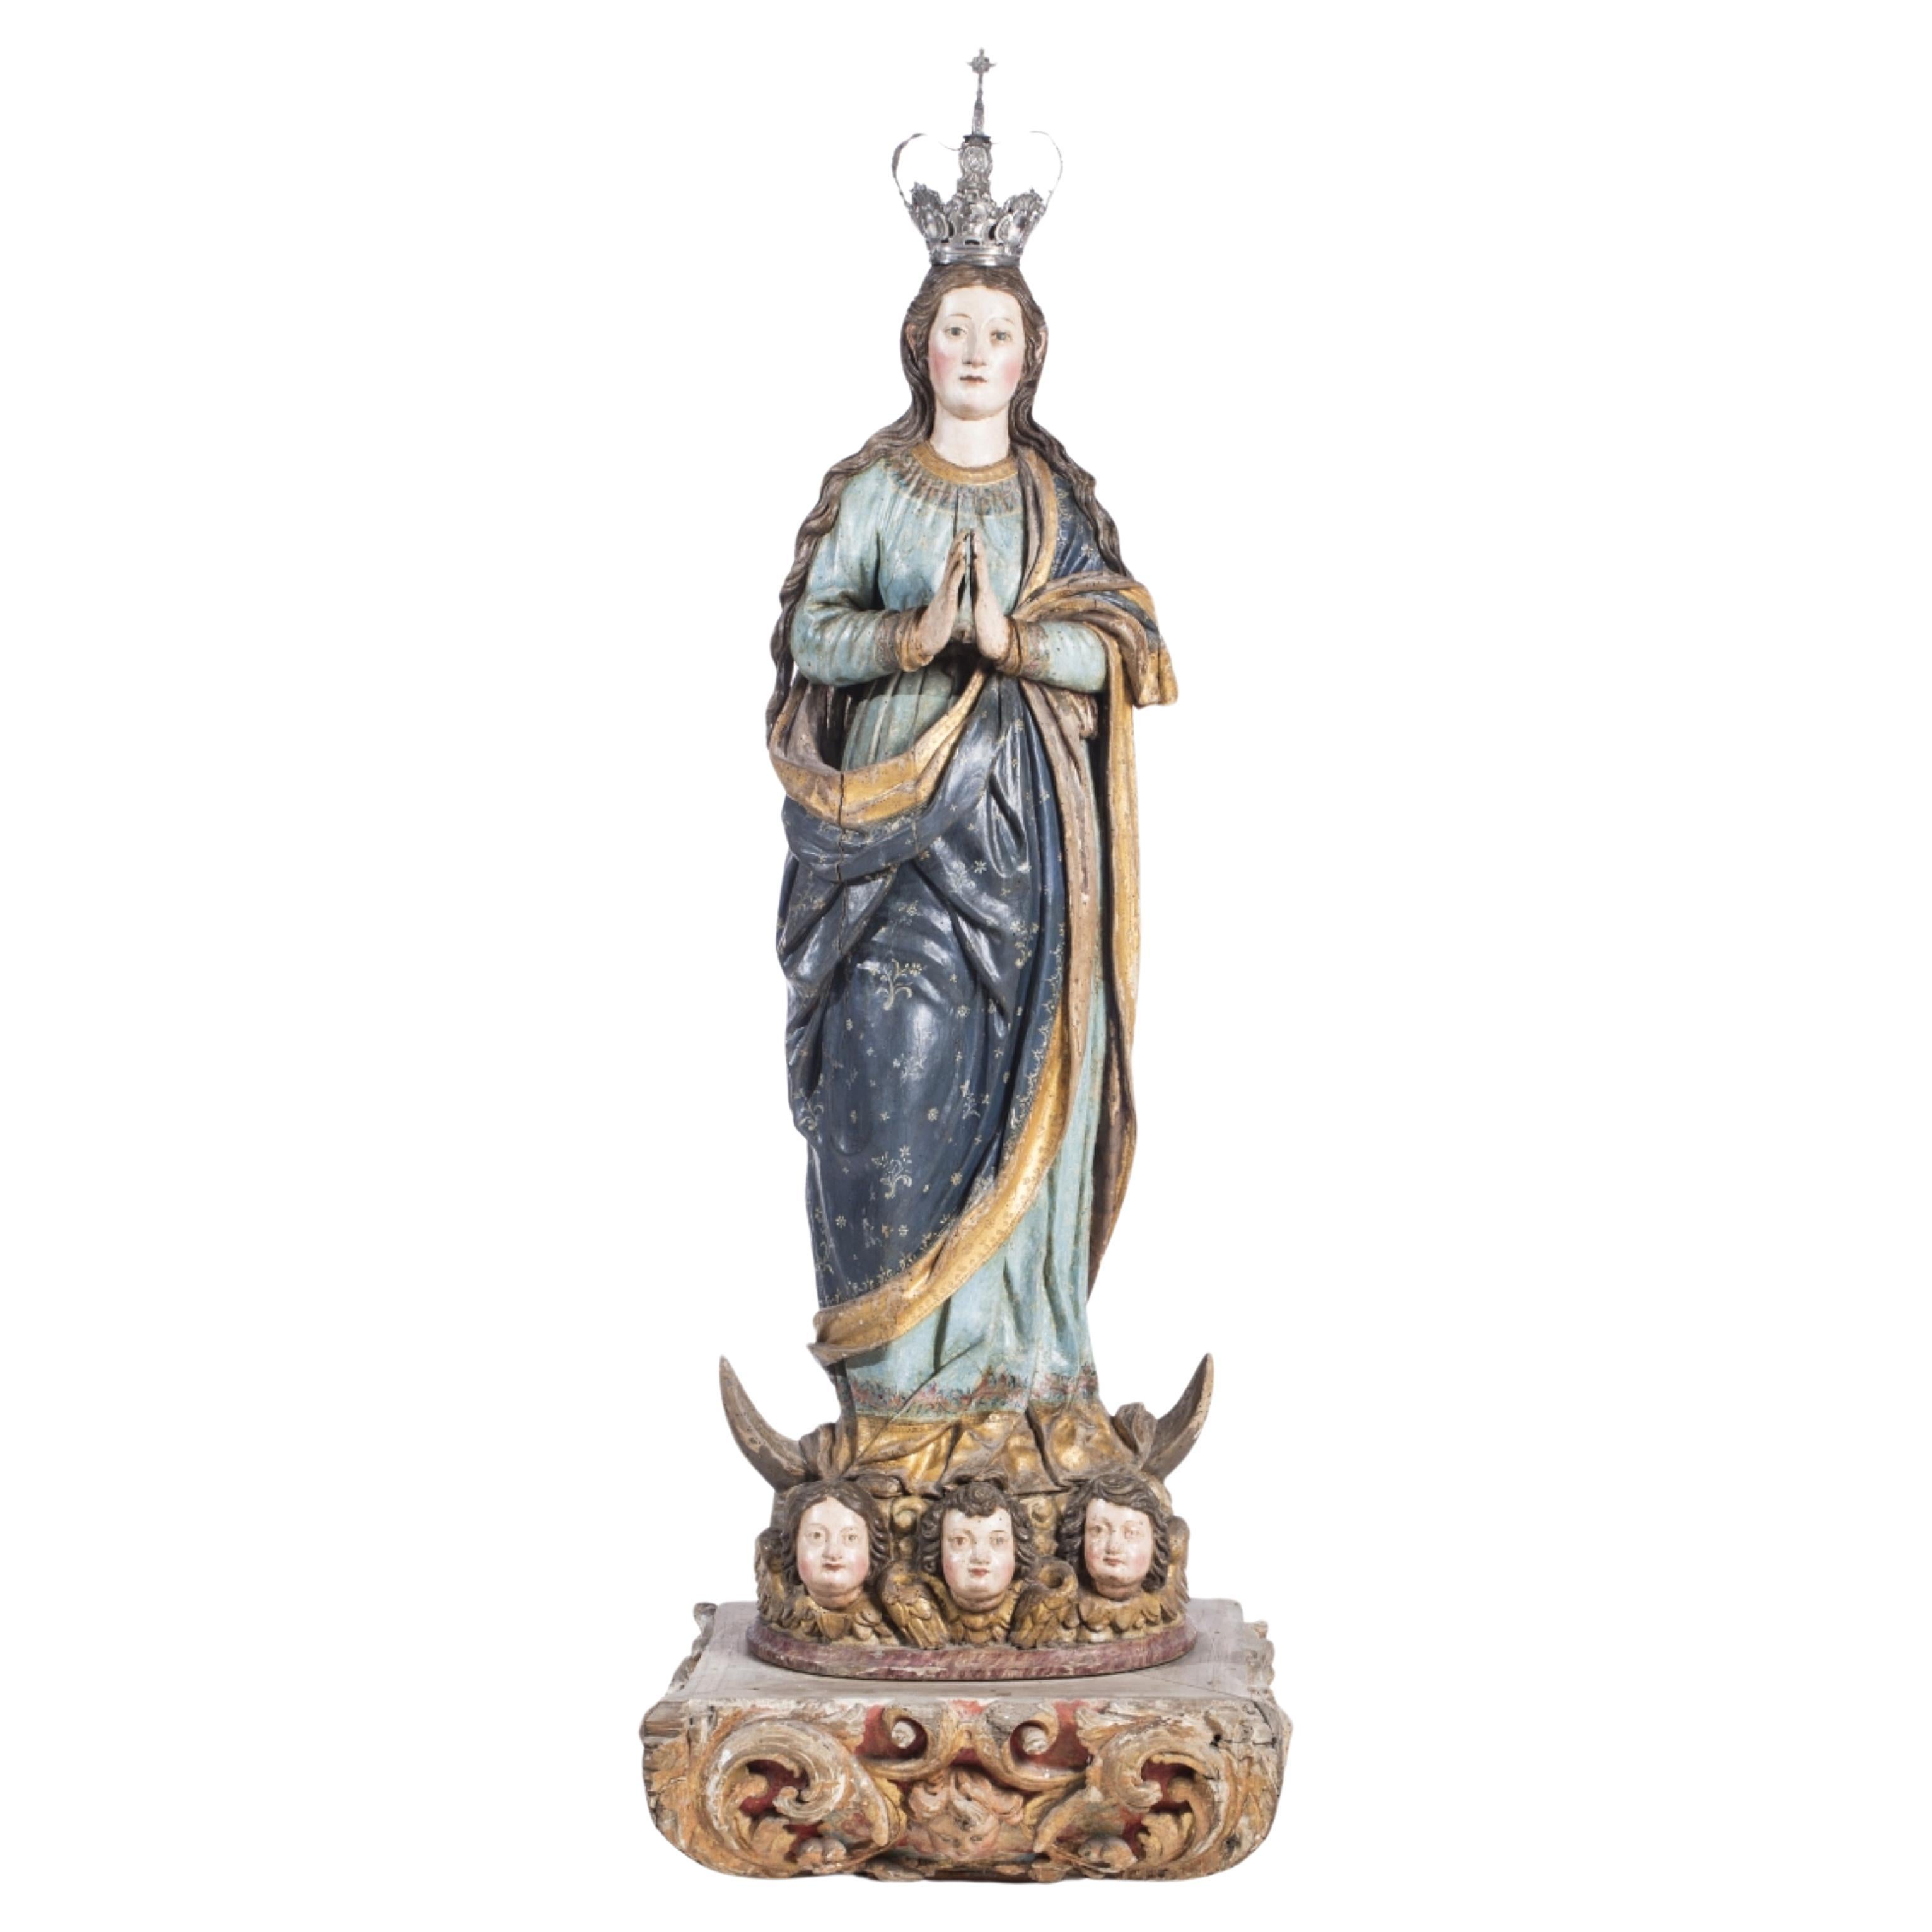 Indo-Portuguese sculpture "Lady Conception" 17th century, H 147cm